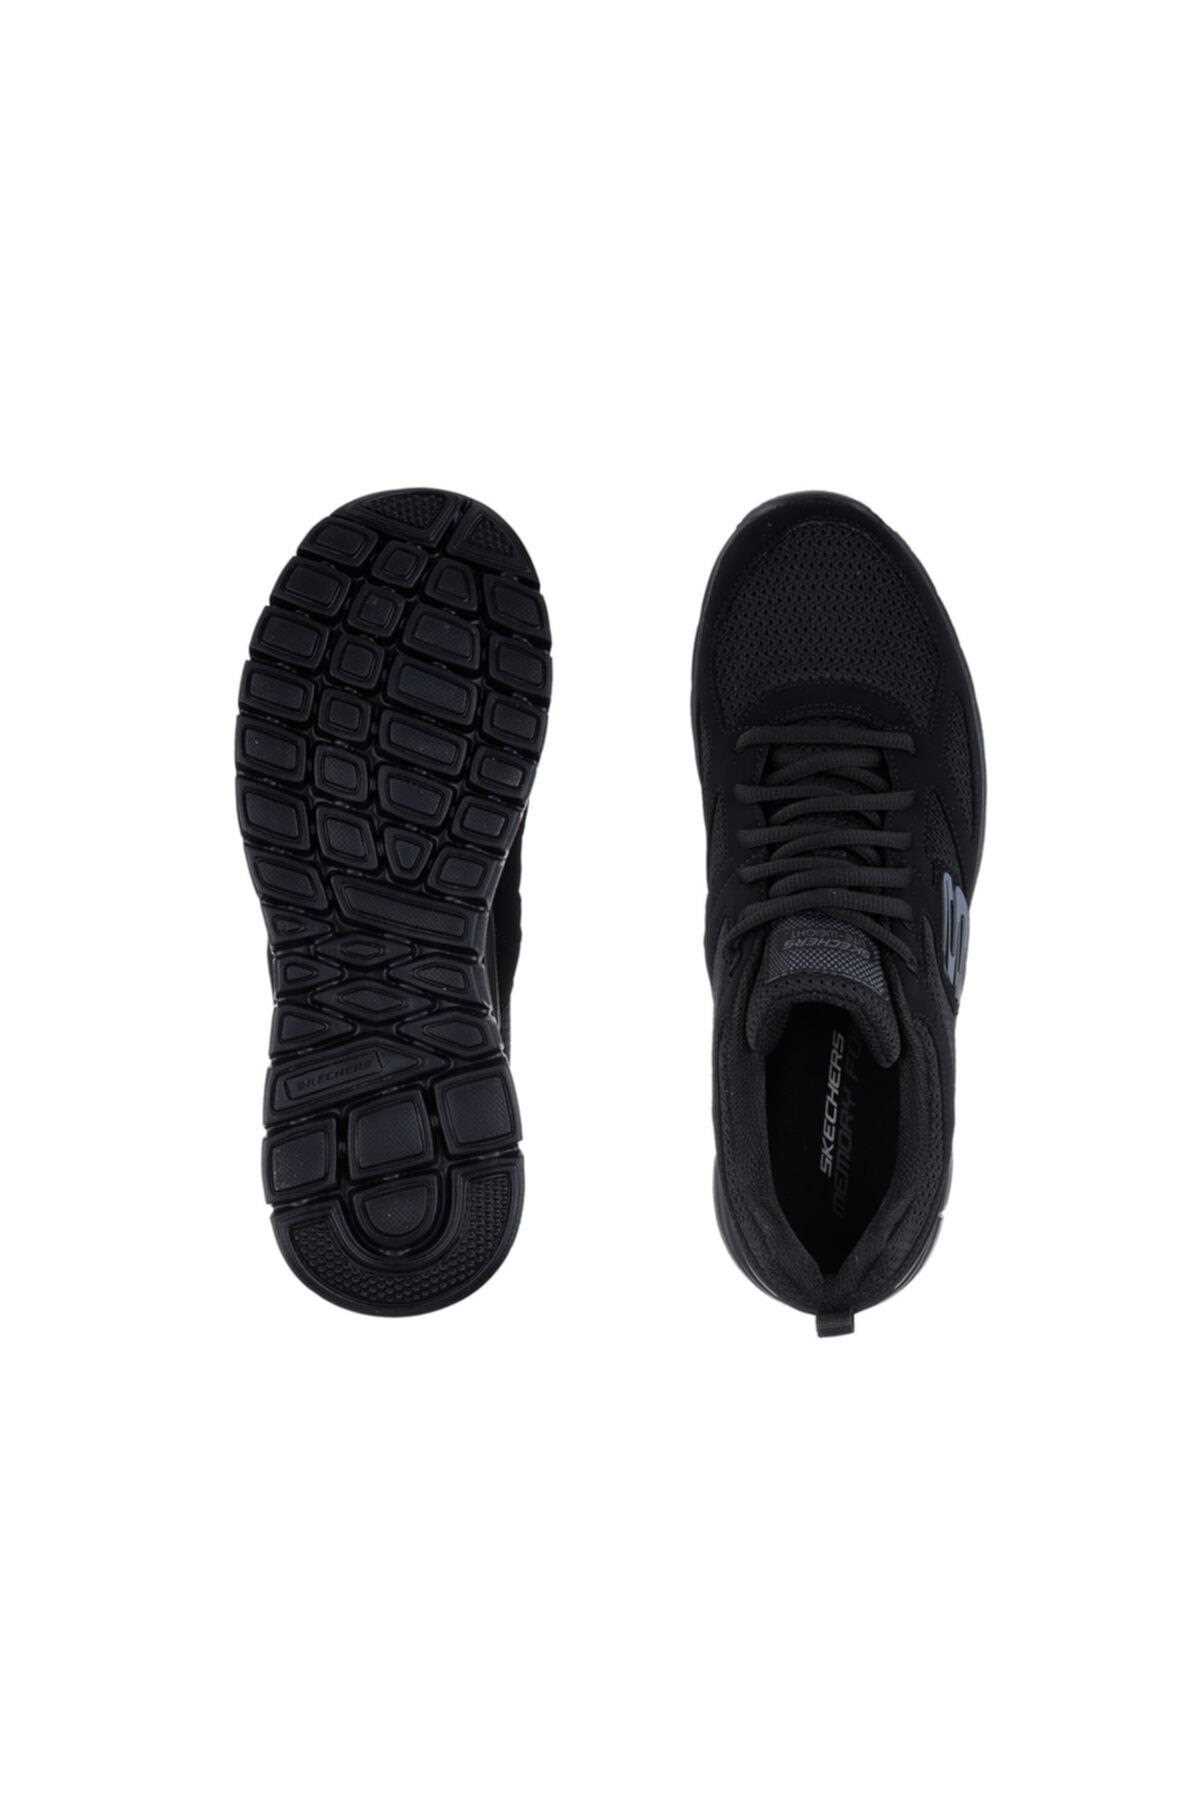 فروش کفش اسپرت مردانه جدید شیک اسکیچرز رنگ مشکی کد ty39929015